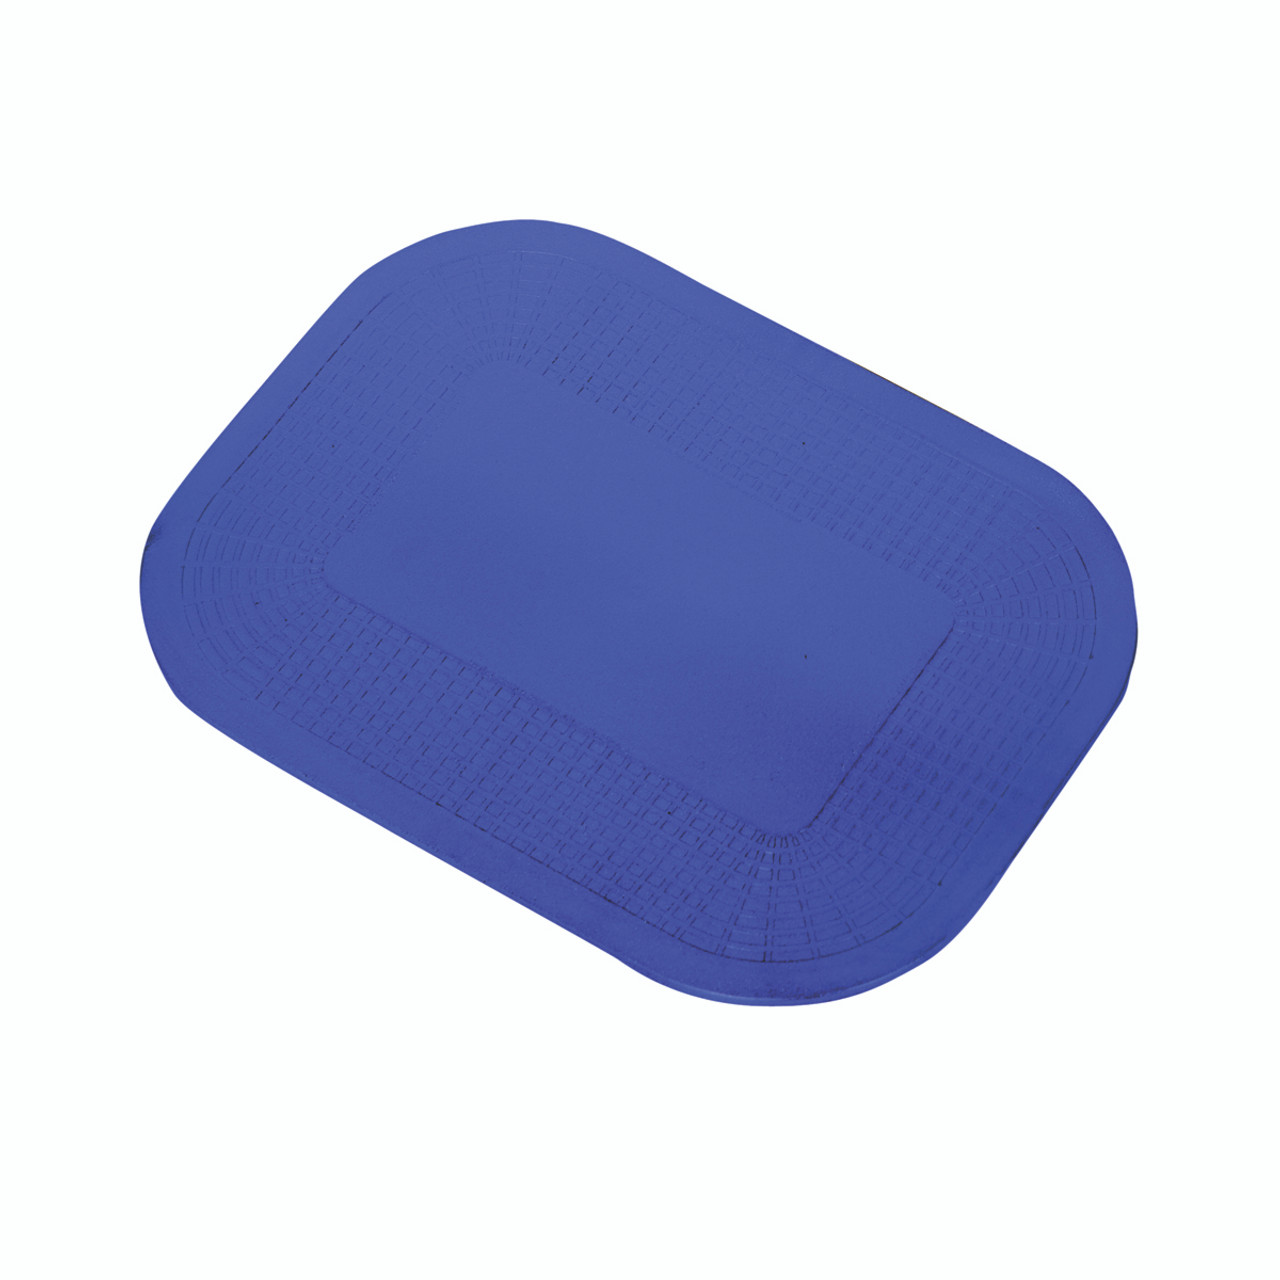 Dycem¨ non-slip rectangular pad, 10"x14", blue